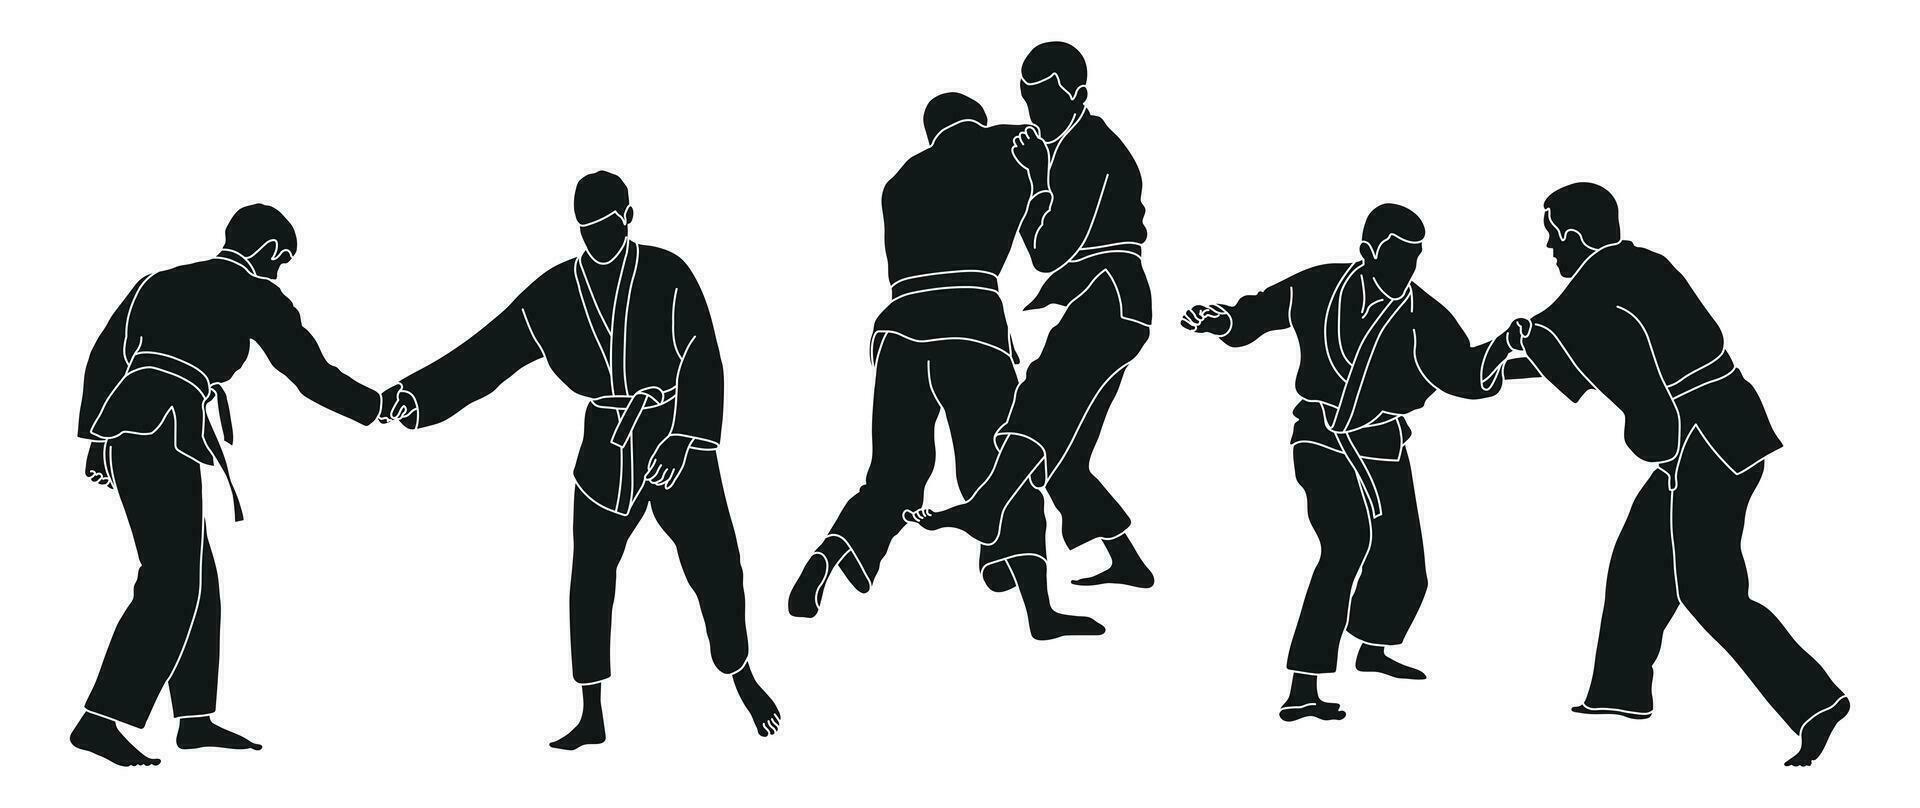 Sketch judoist, judoka, athlete duel, fight, judo, sport figure vector